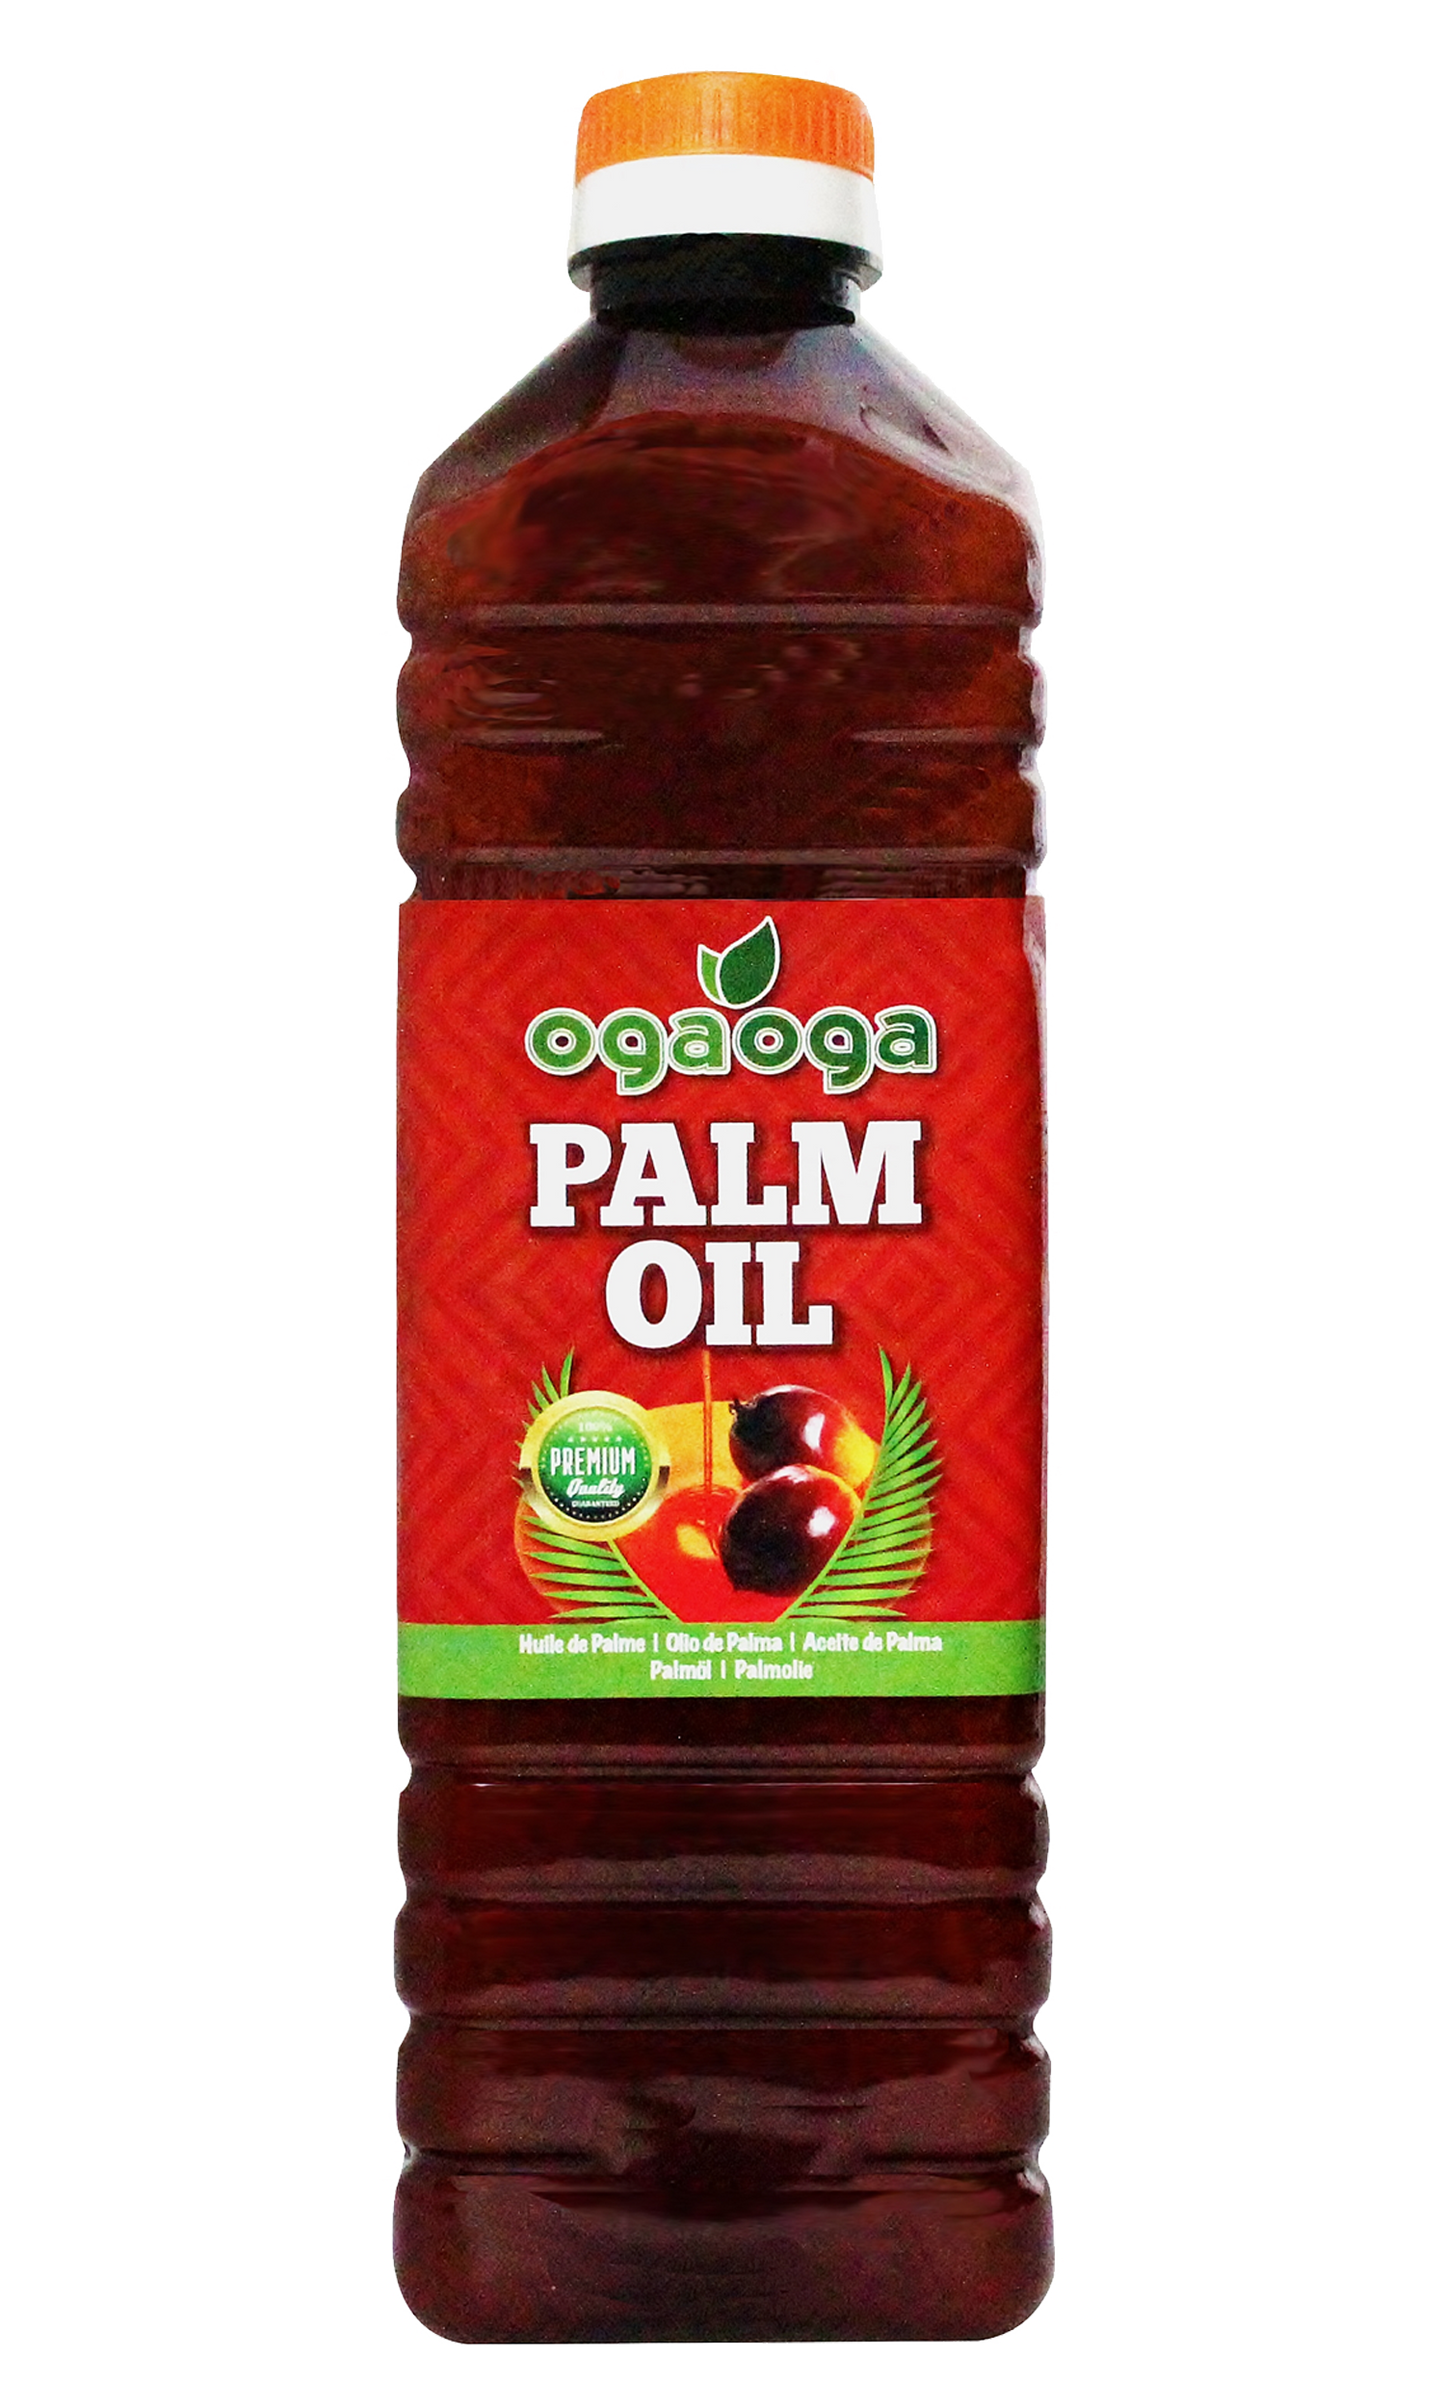 Oga Oga Palm Oil 1L